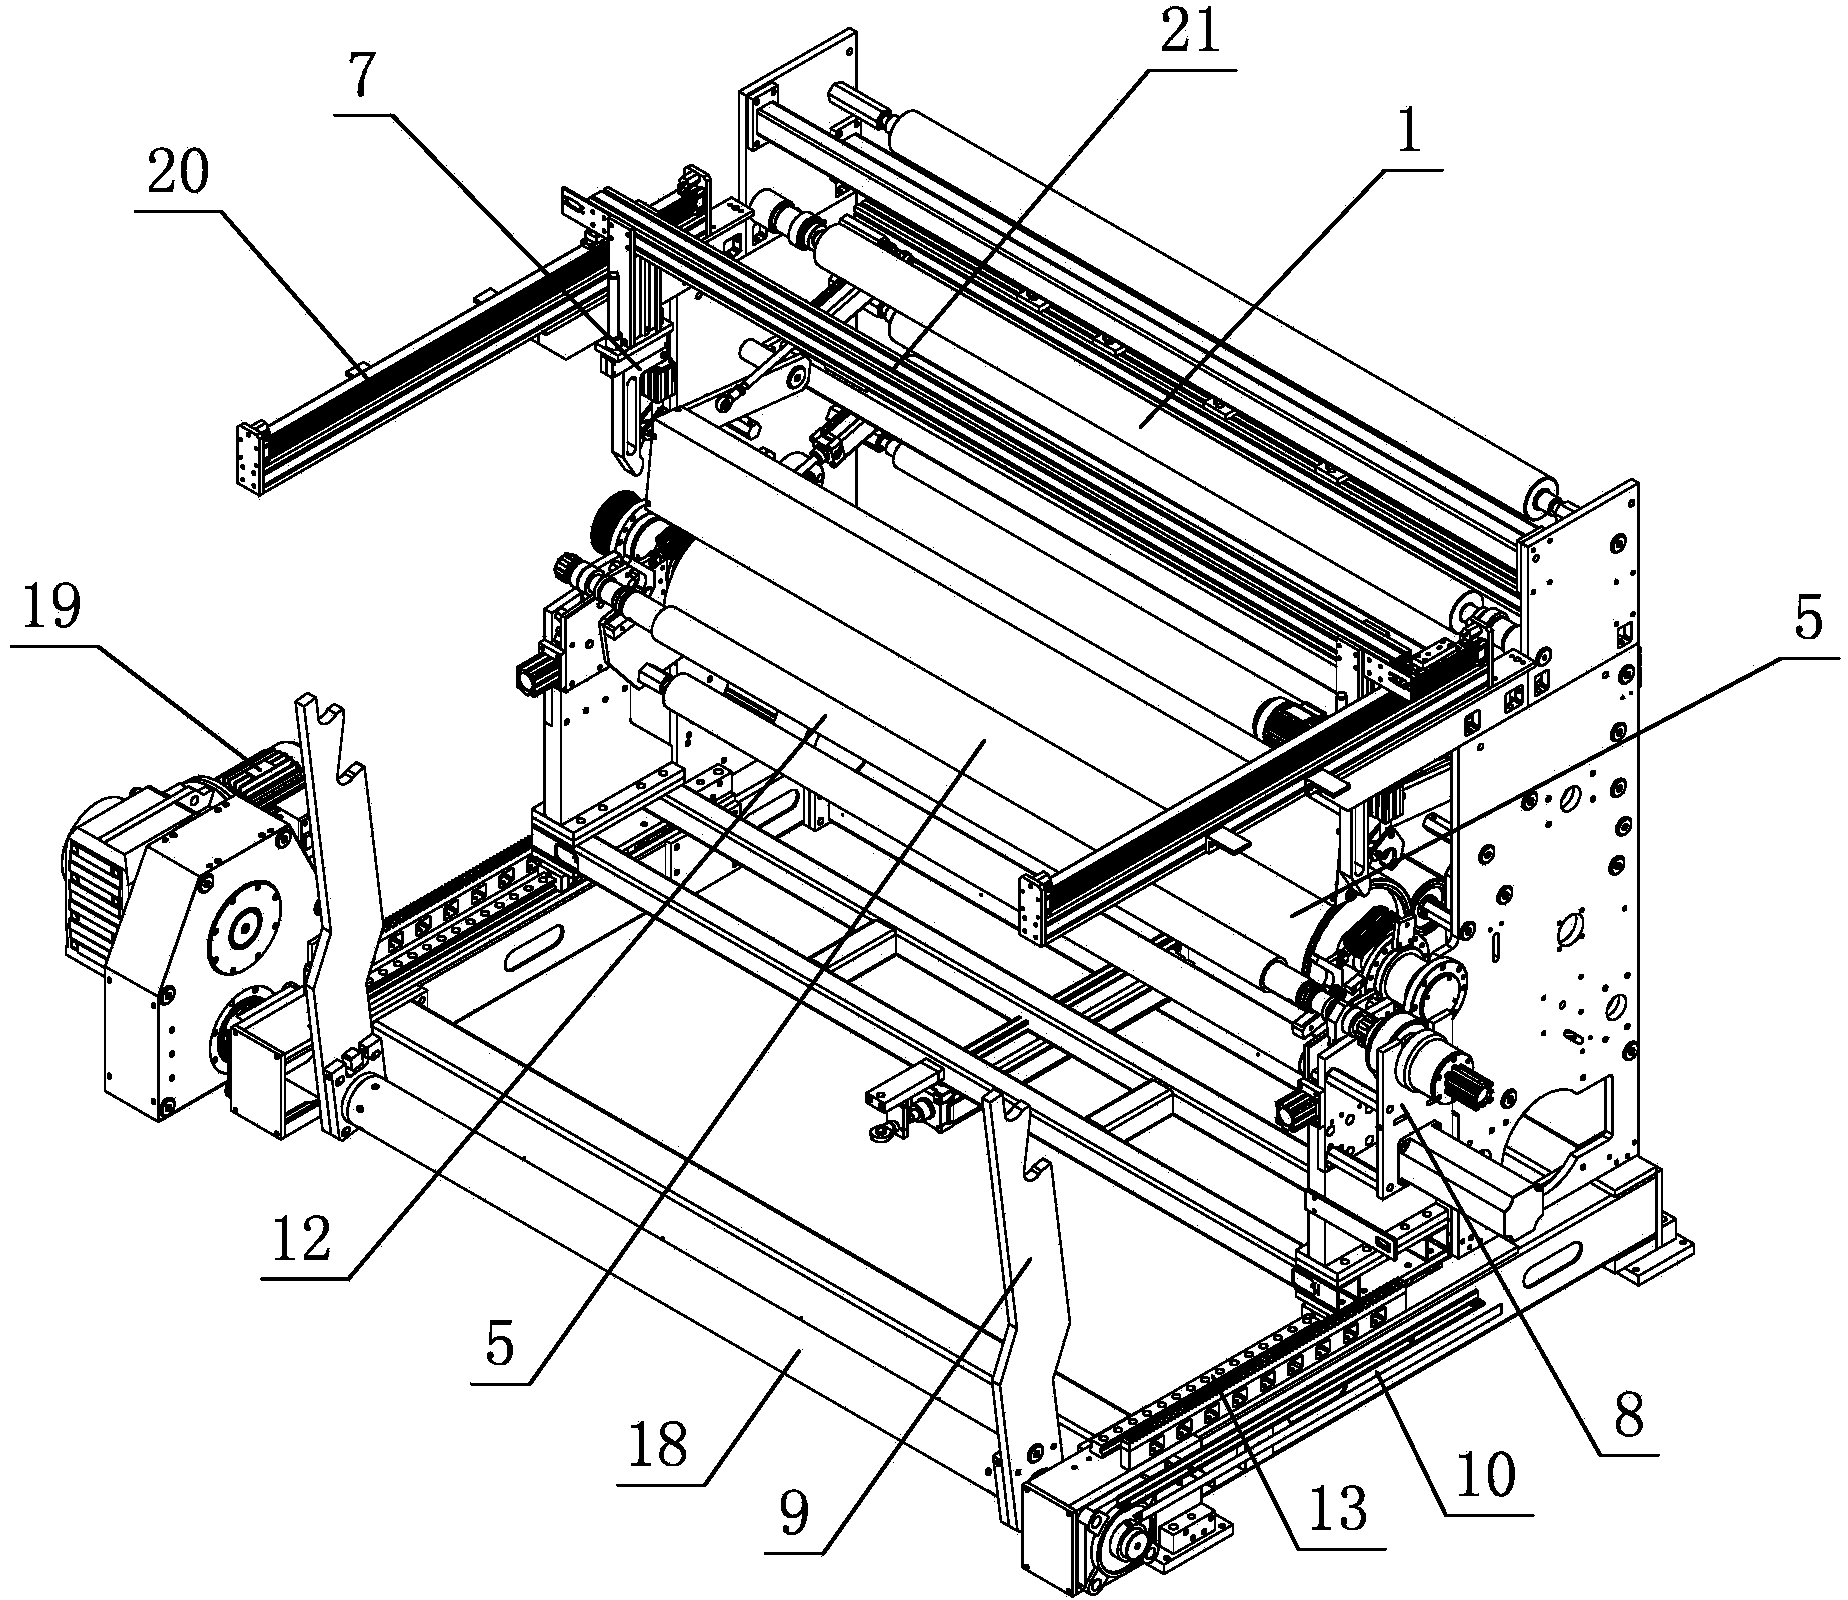 Thin film center and surface winding machine